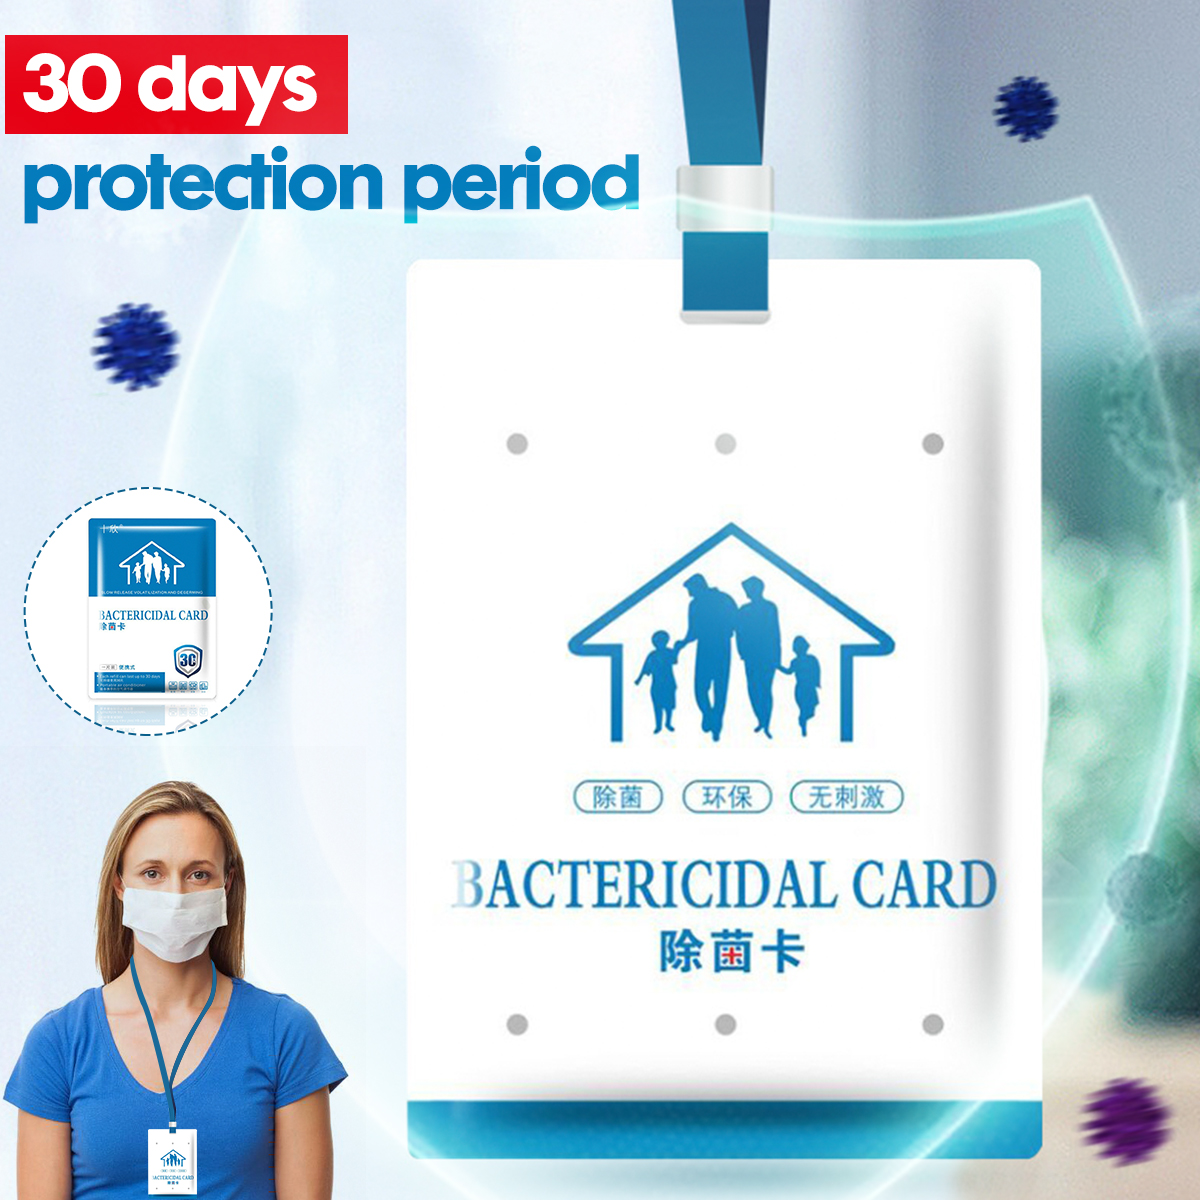 Sanitization-Card-30-Days-Validity-Period-1-Cubic-Meter-Aiir-Sterilization-Card-1794583-1